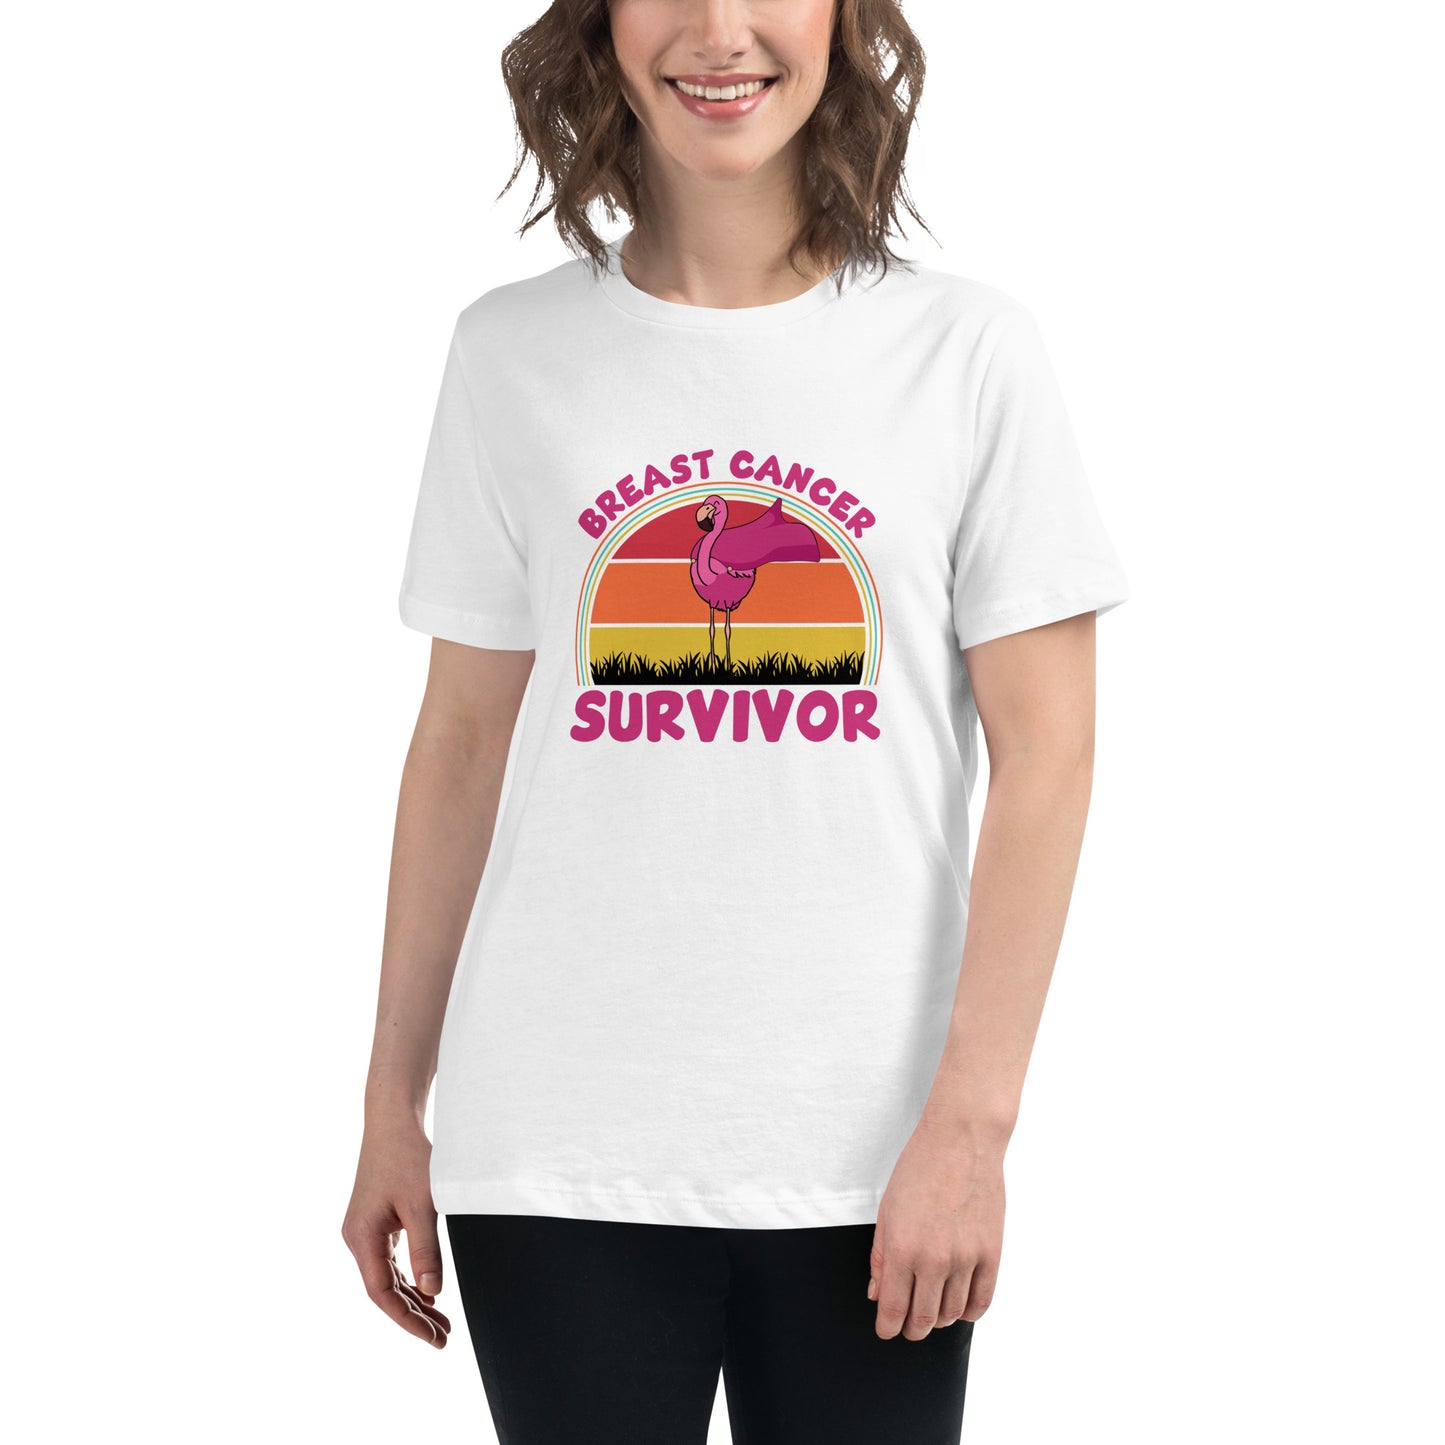 Breast Cancer Survivor Women's Relaxed Tshirt